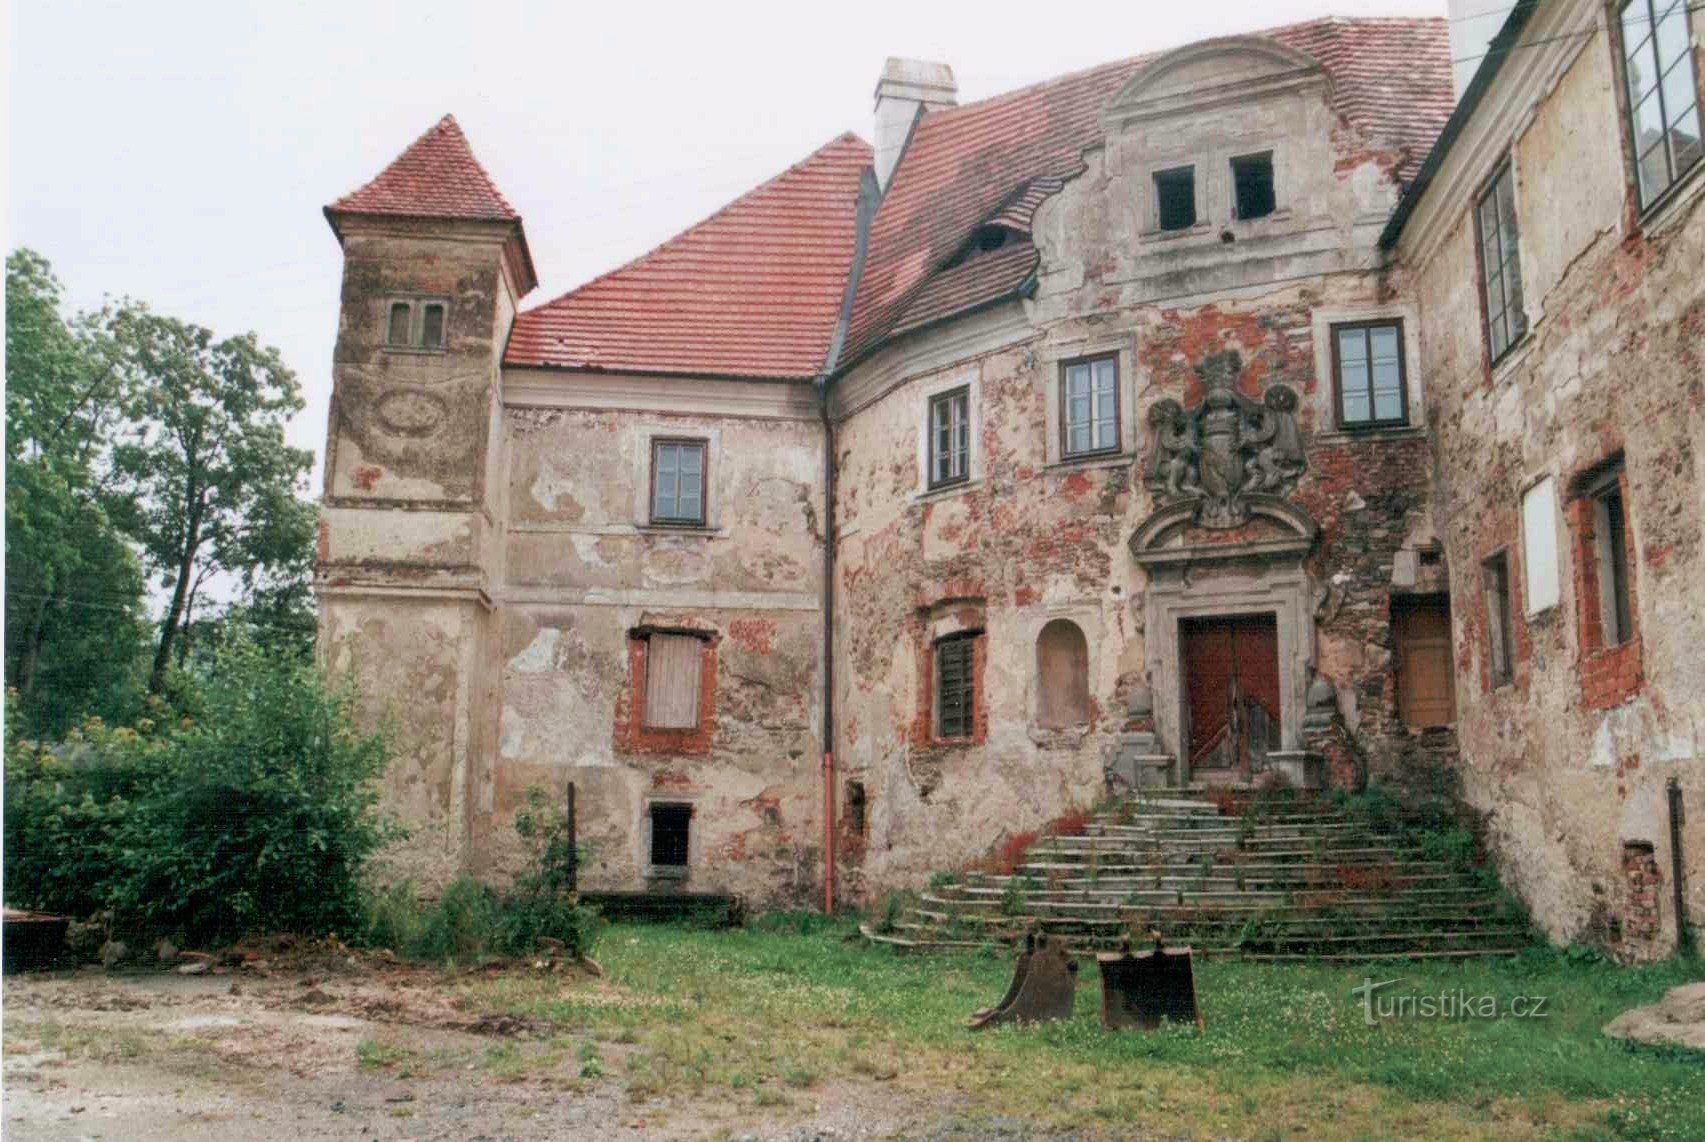 castle in Pobežovice, I hope this is no longer true